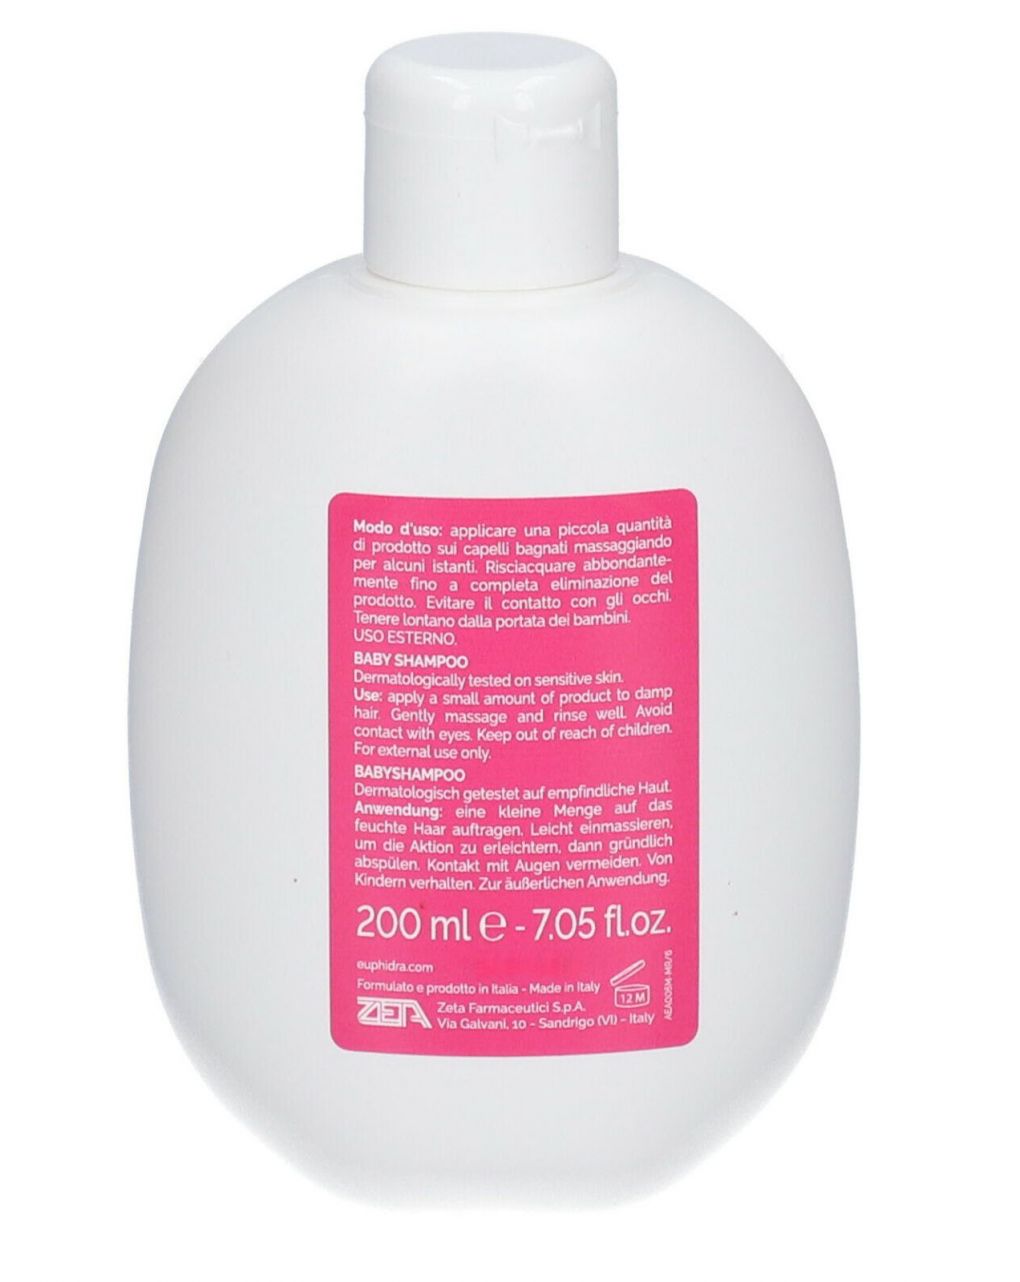 Euphidra amidomio baby shampoo 200ml - Euphidra